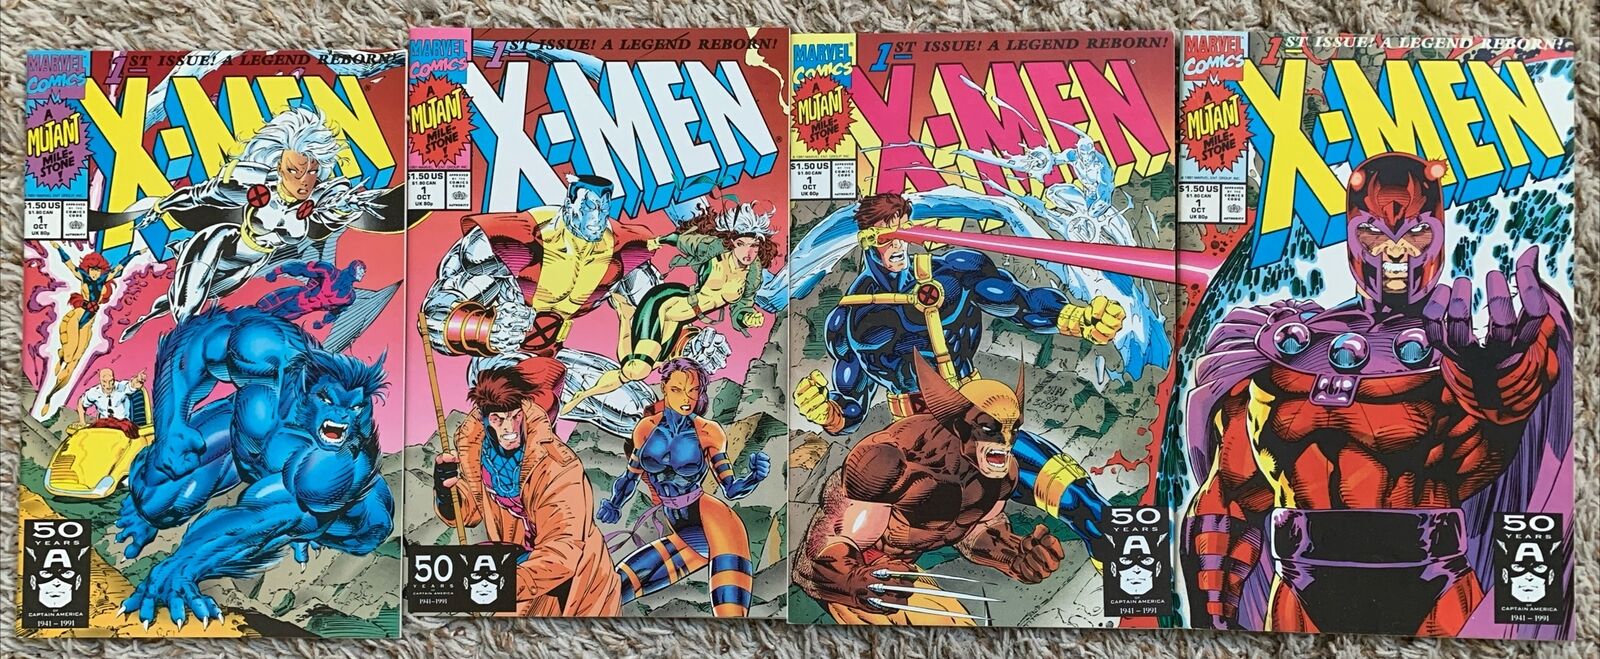 X-MEN #1 (Marvel 1991) JIM LEE Connecting Variants-Set of 4-Xmen 97-VF/NM